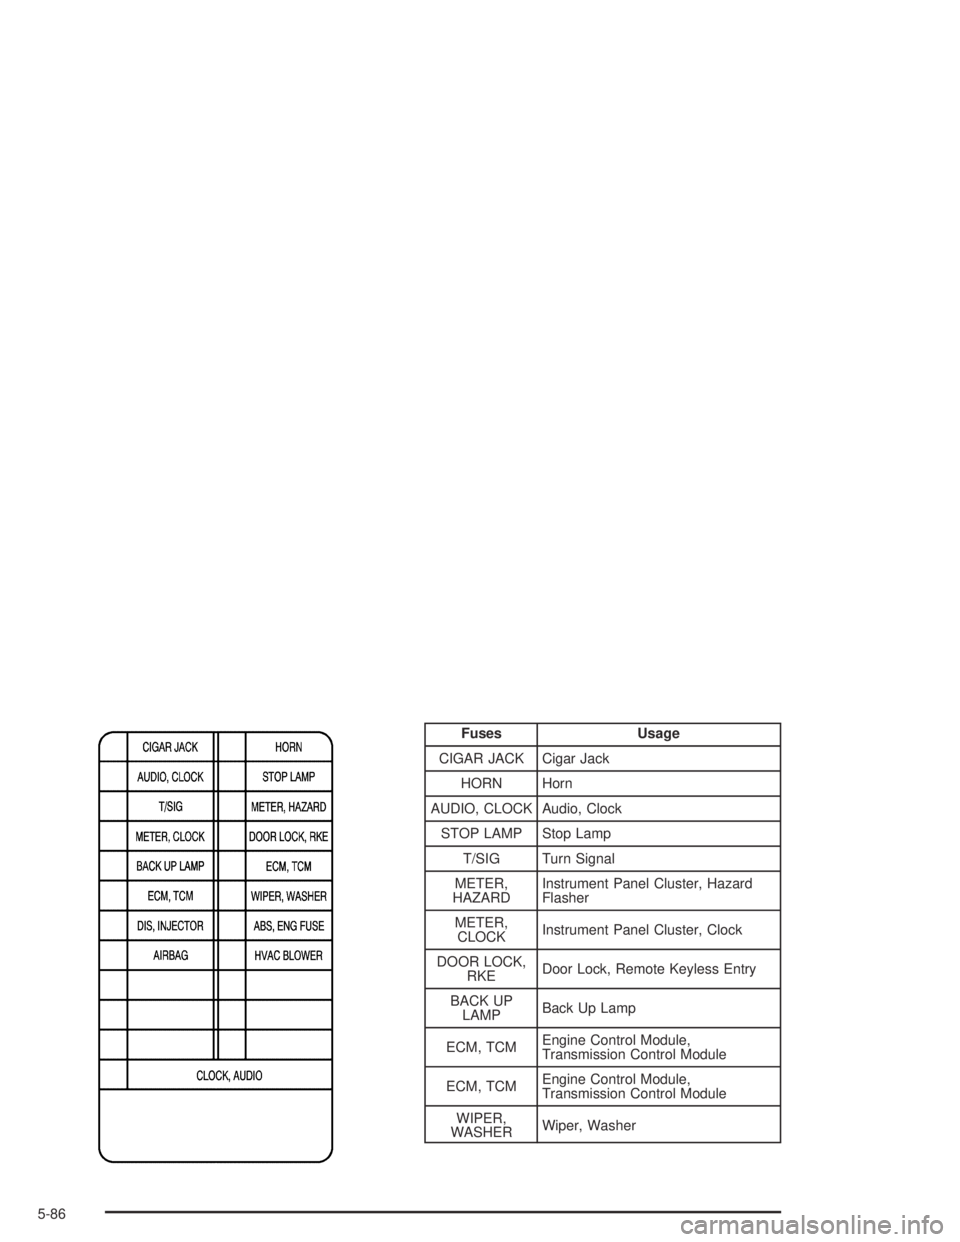 CHEVROLET AVEO 2002  Service Repair Manual Fuses Usage
CIGAR JACK Cigar Jack
HORN Horn
AUDIO, CLOCK Audio, Clock
STOP LAMP Stop Lamp
T/SIG Turn Signal
METER,
HAZARDInstrument Panel Cluster, Hazard
Flasher
METER,
CLOCKInstrument Panel Cluster, 